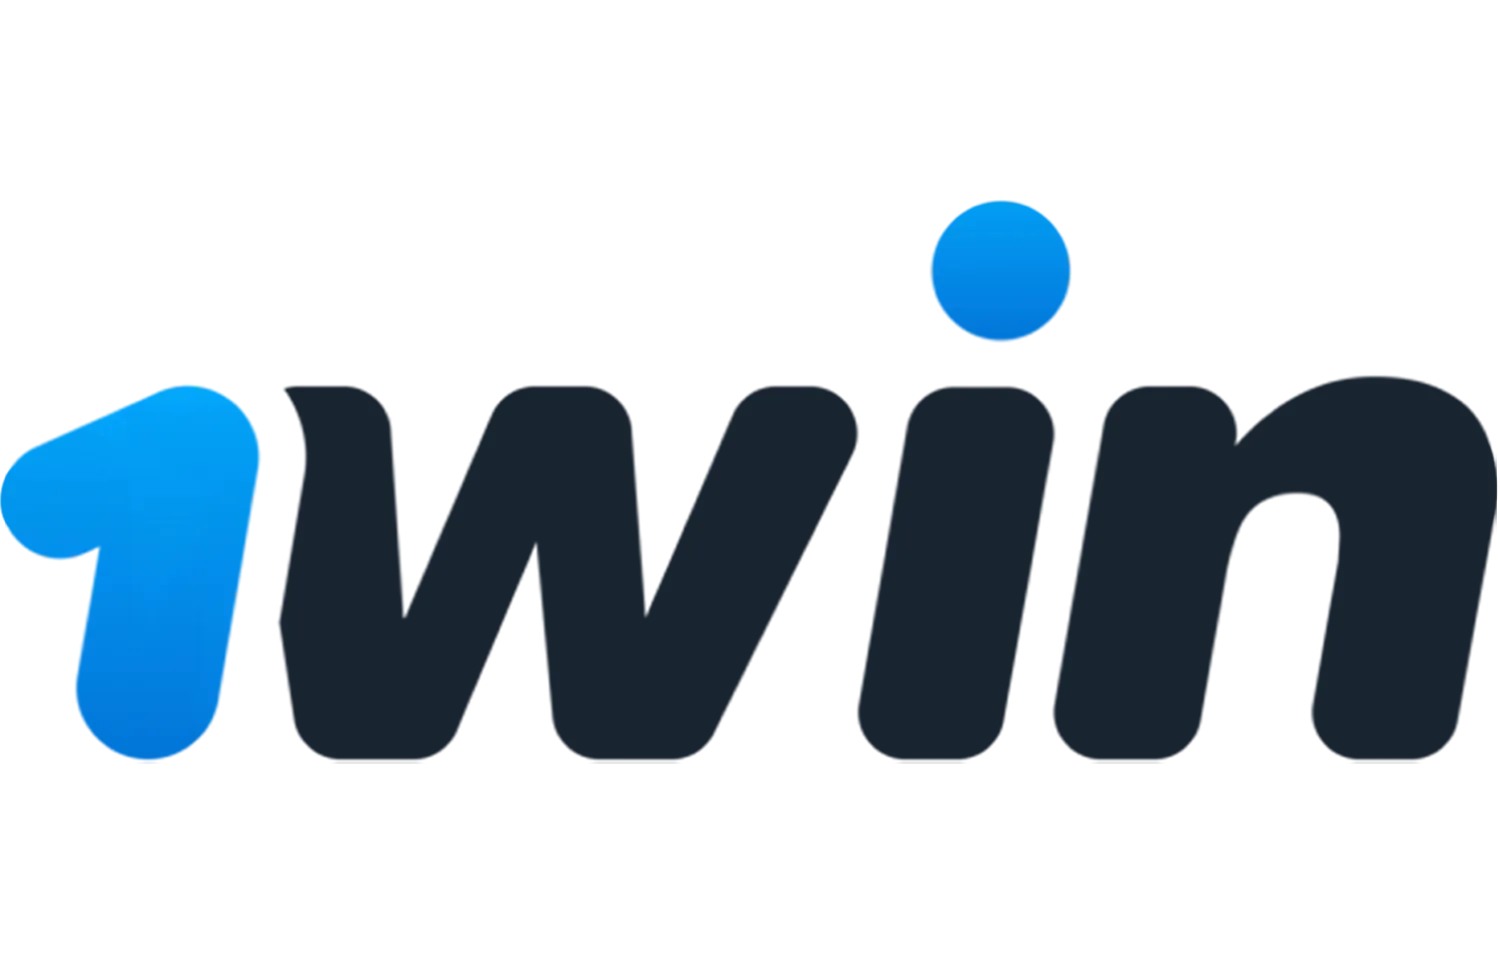 1win logo.